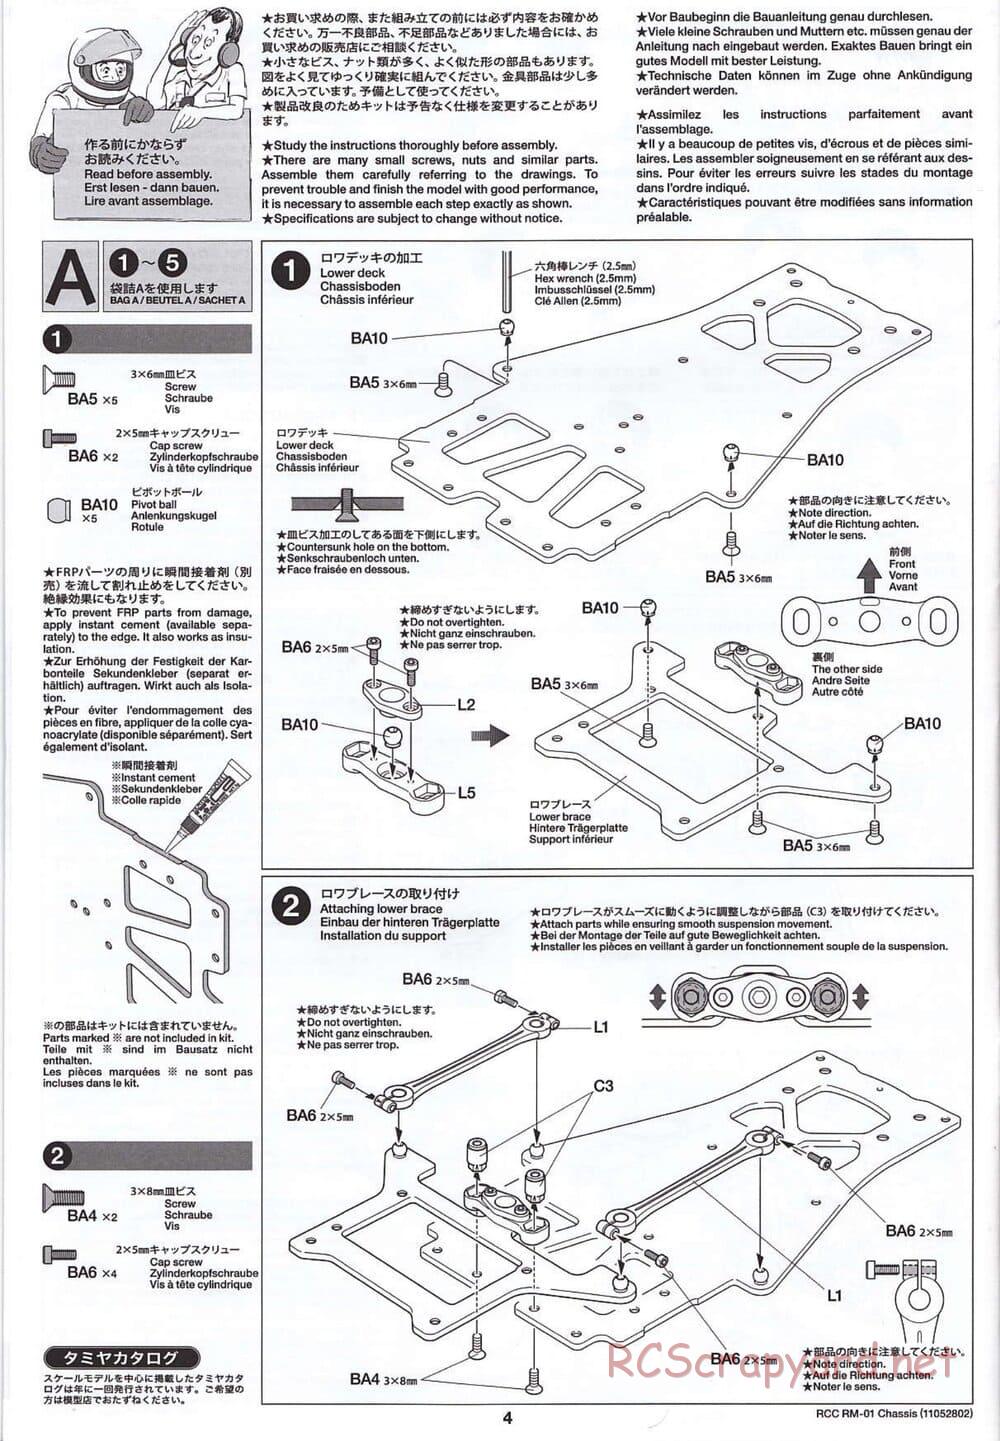 Tamiya - RM-01 Chassis - Manual - Page 4